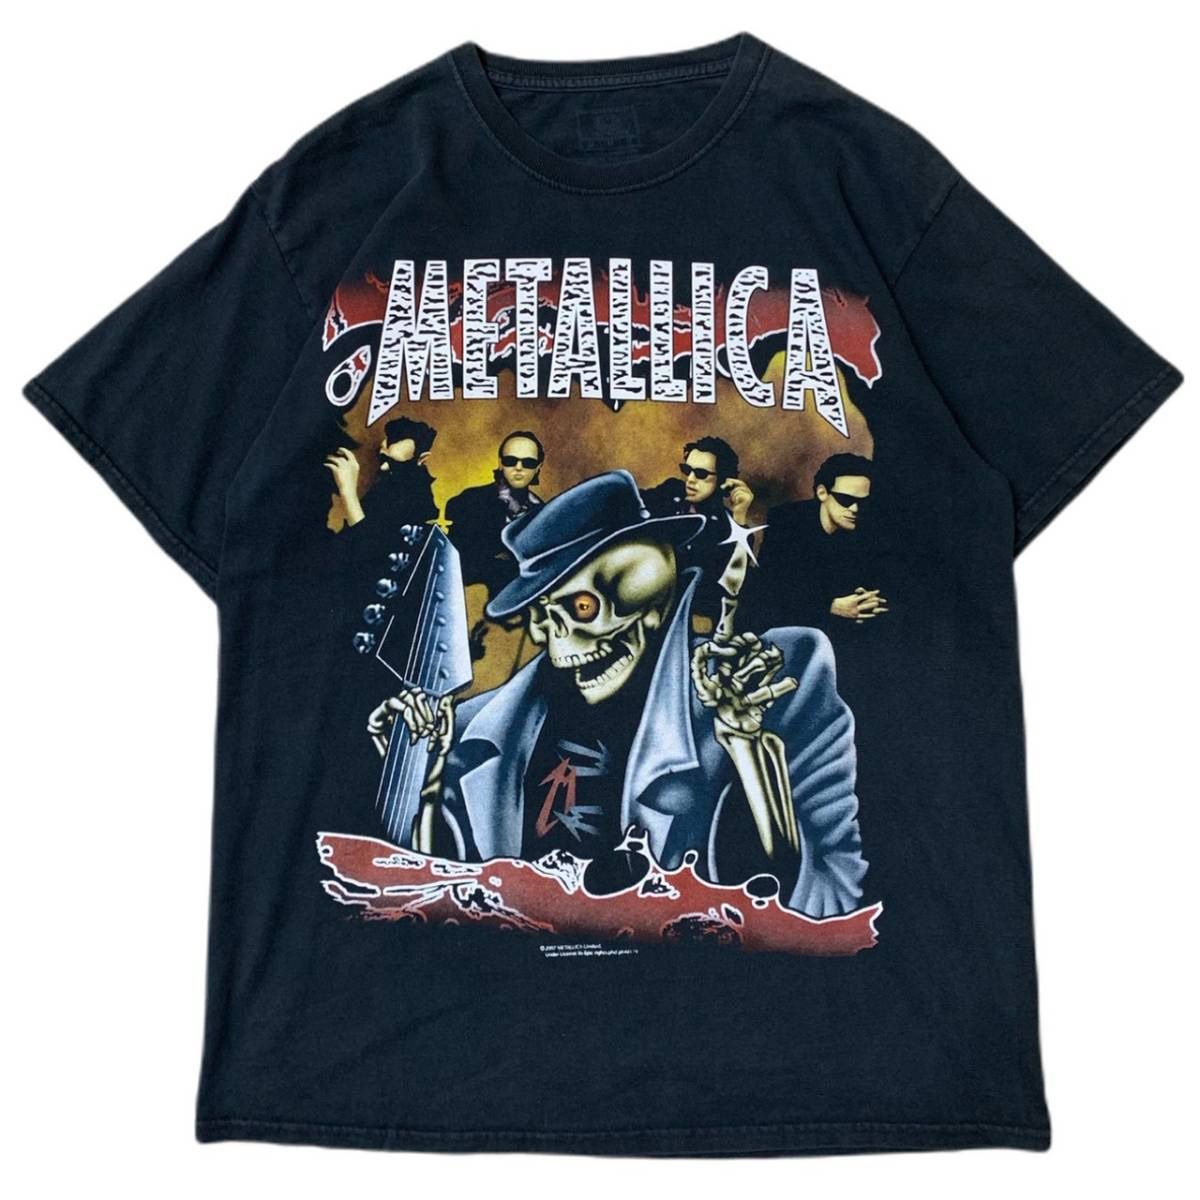 METALLICA メタリカ ロック バンド バンT ロックT tシャツ M - メルカリ